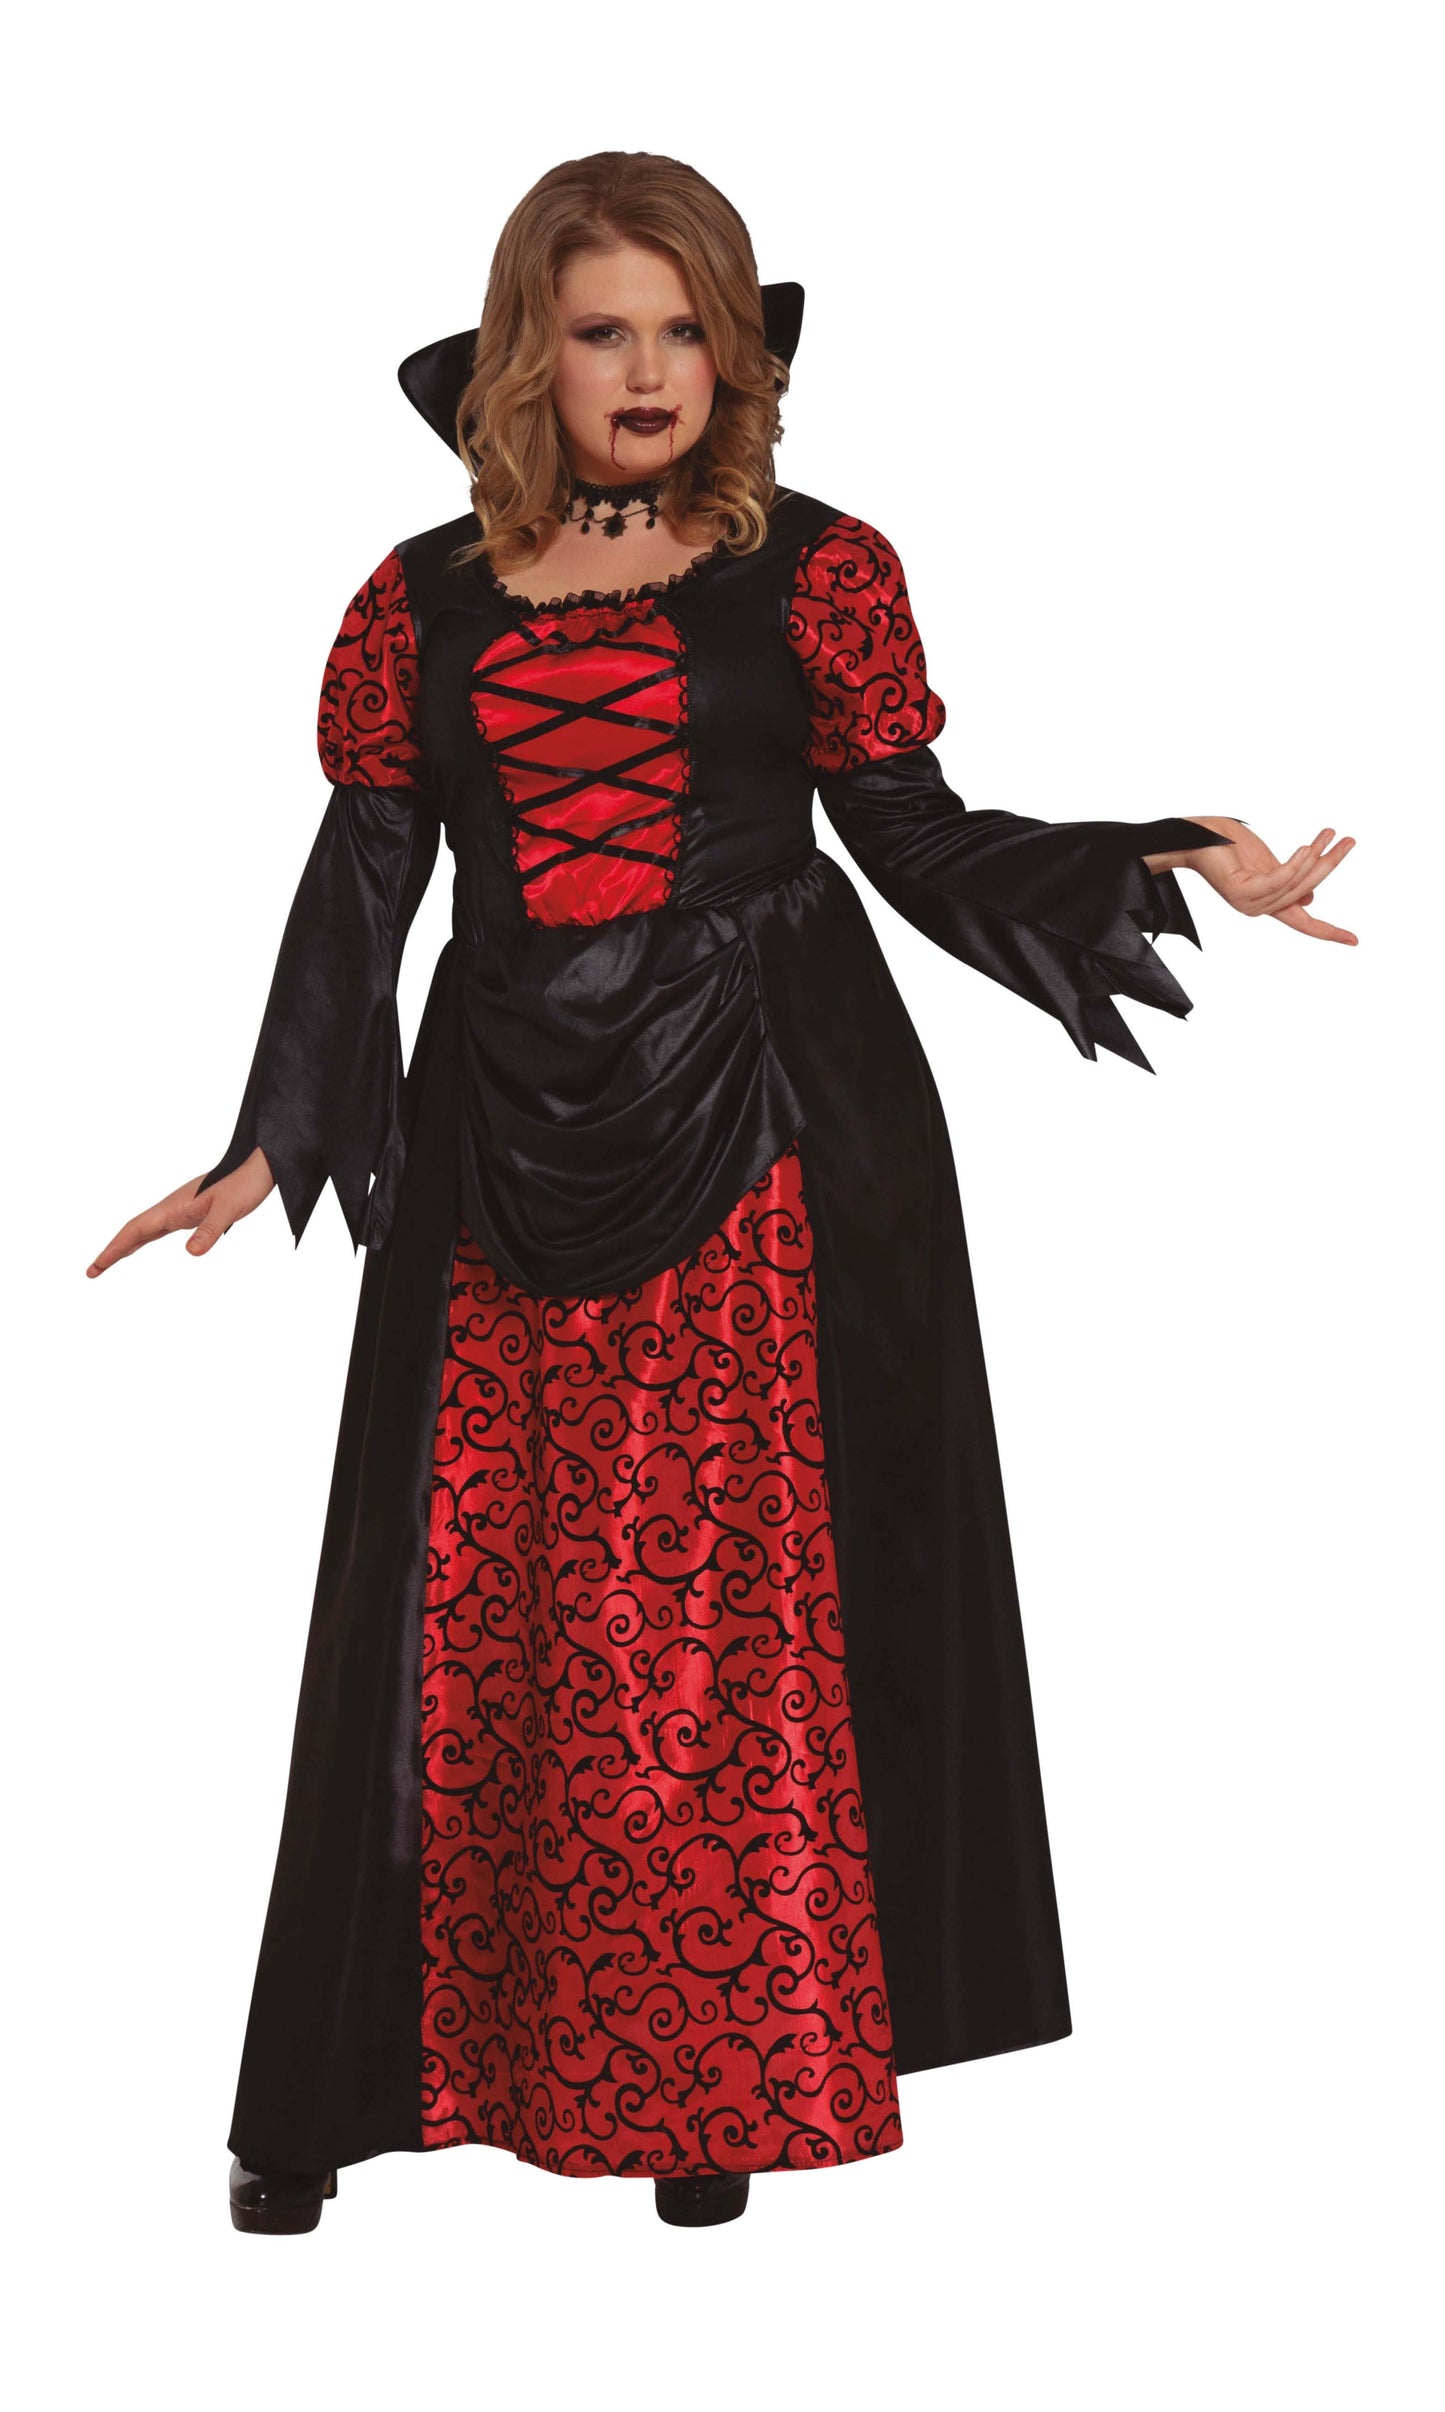 Vampiress costume includes dress and neckpiece